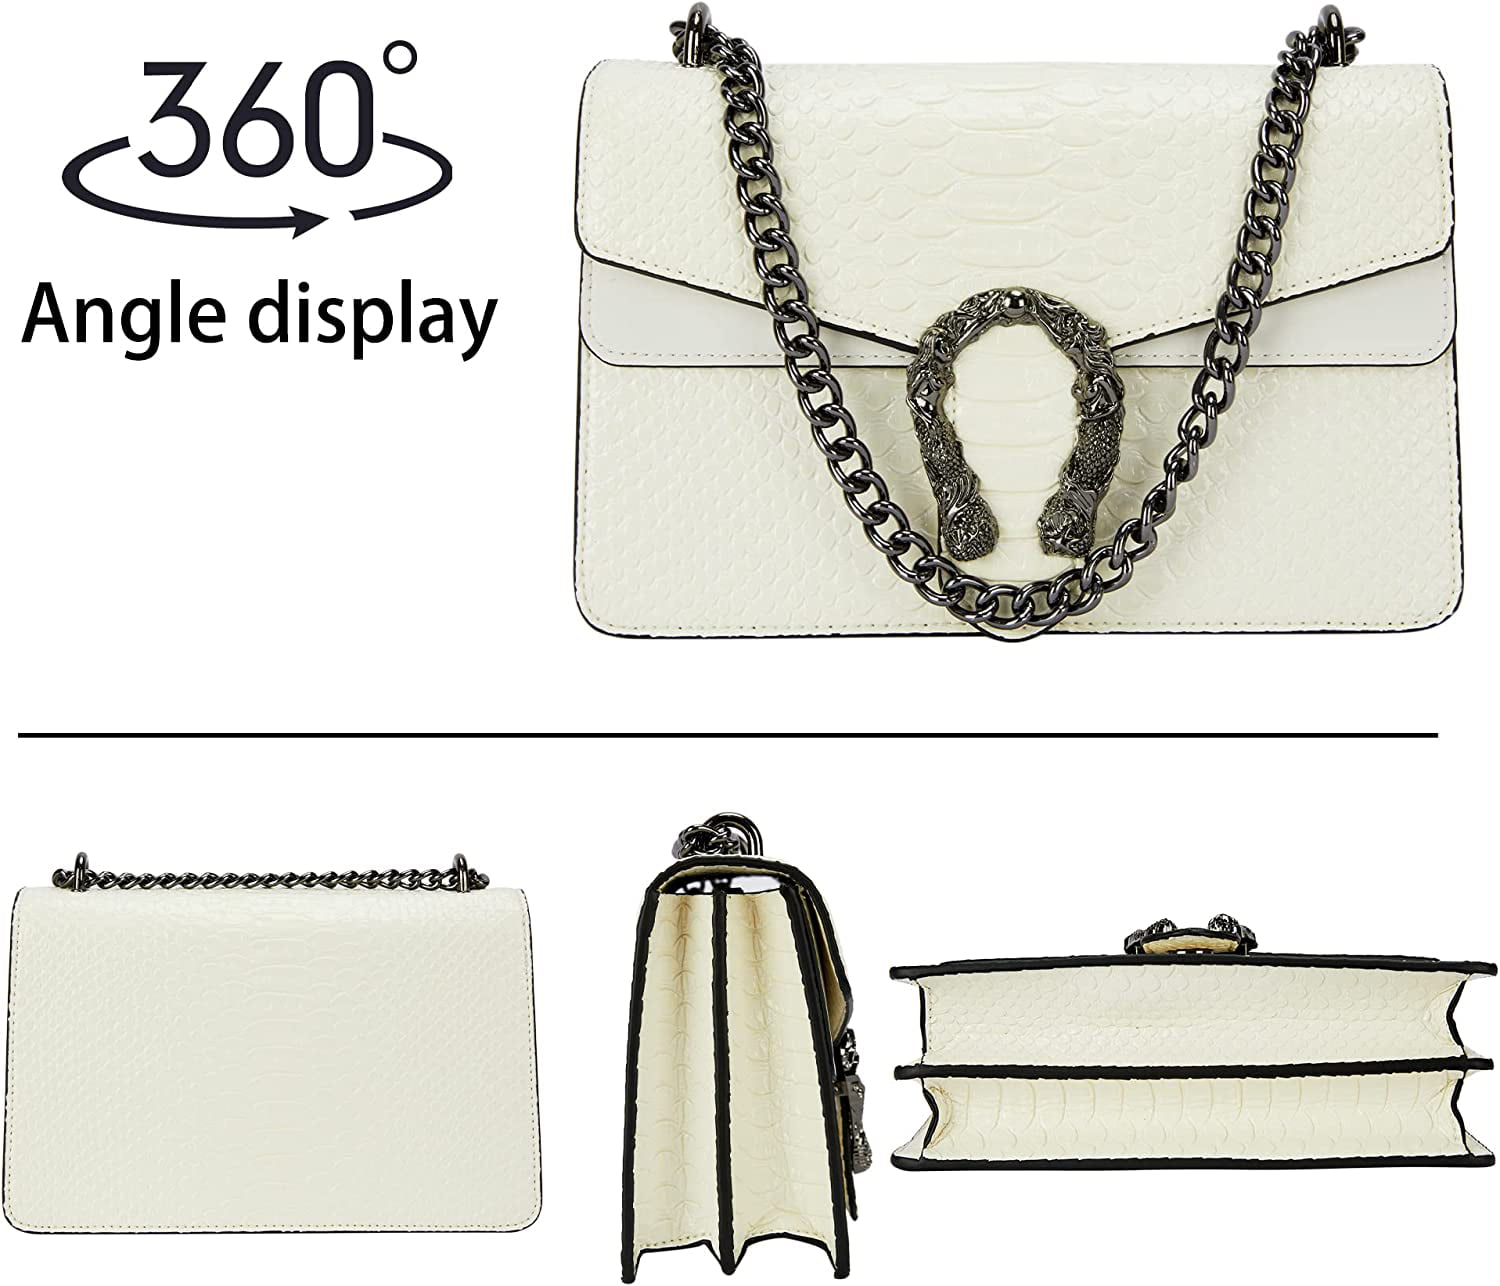 Aiqudou Crossbody Satchel Handbag for Women - Fashion Snake Print Chain  Purse luxury Leather Shoulder Bags Evening Bag 